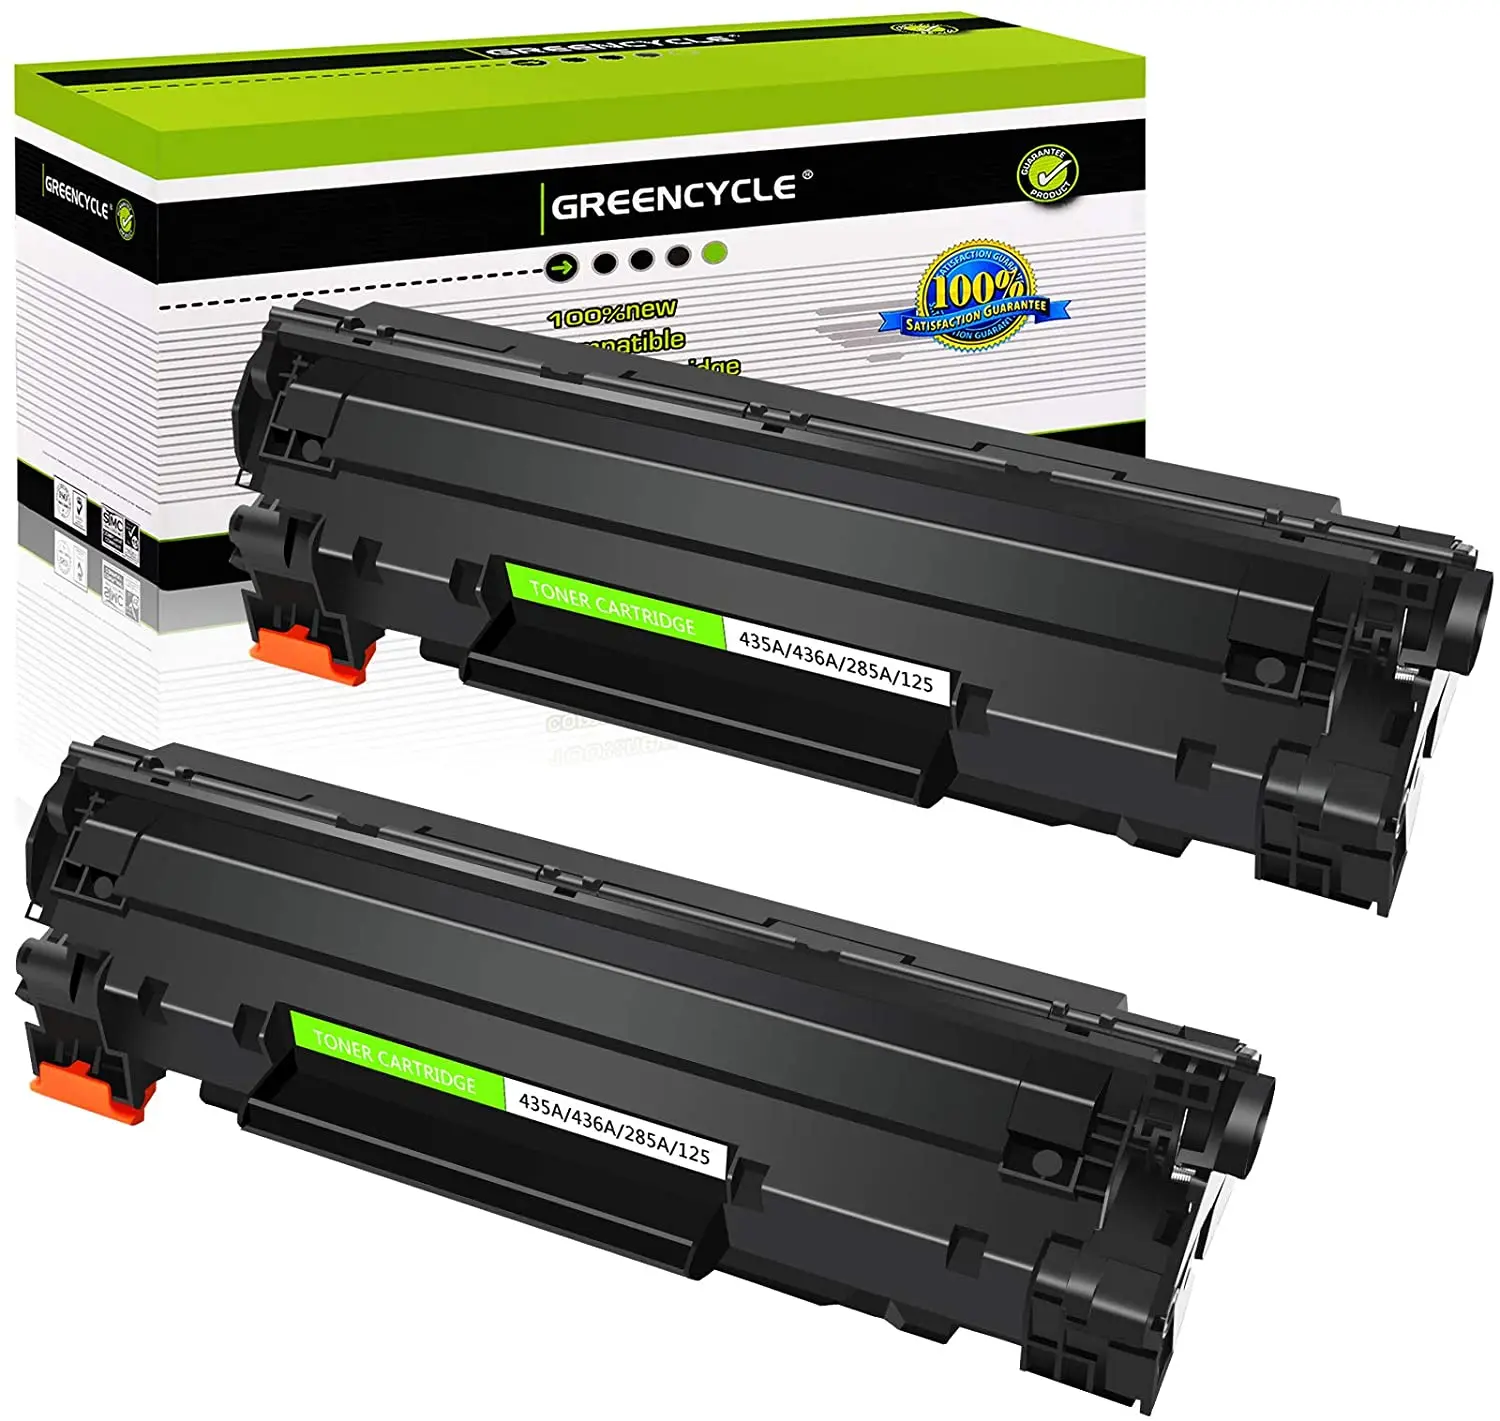 

Greencycle 85A CE285A Black Toner Cartridge Compatible for HP Laserjet Pro M1212nf M1217nfw P1102w P1102 M1212 M1217 M1132 M1214